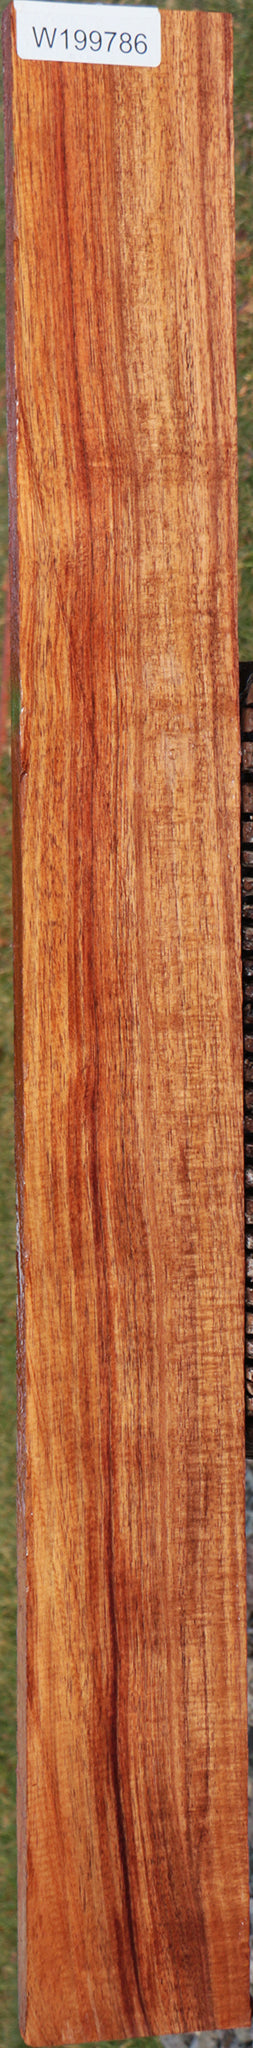 Extra Fancy Figured Quartersawn Hawaiian Koa Instrument Lumber